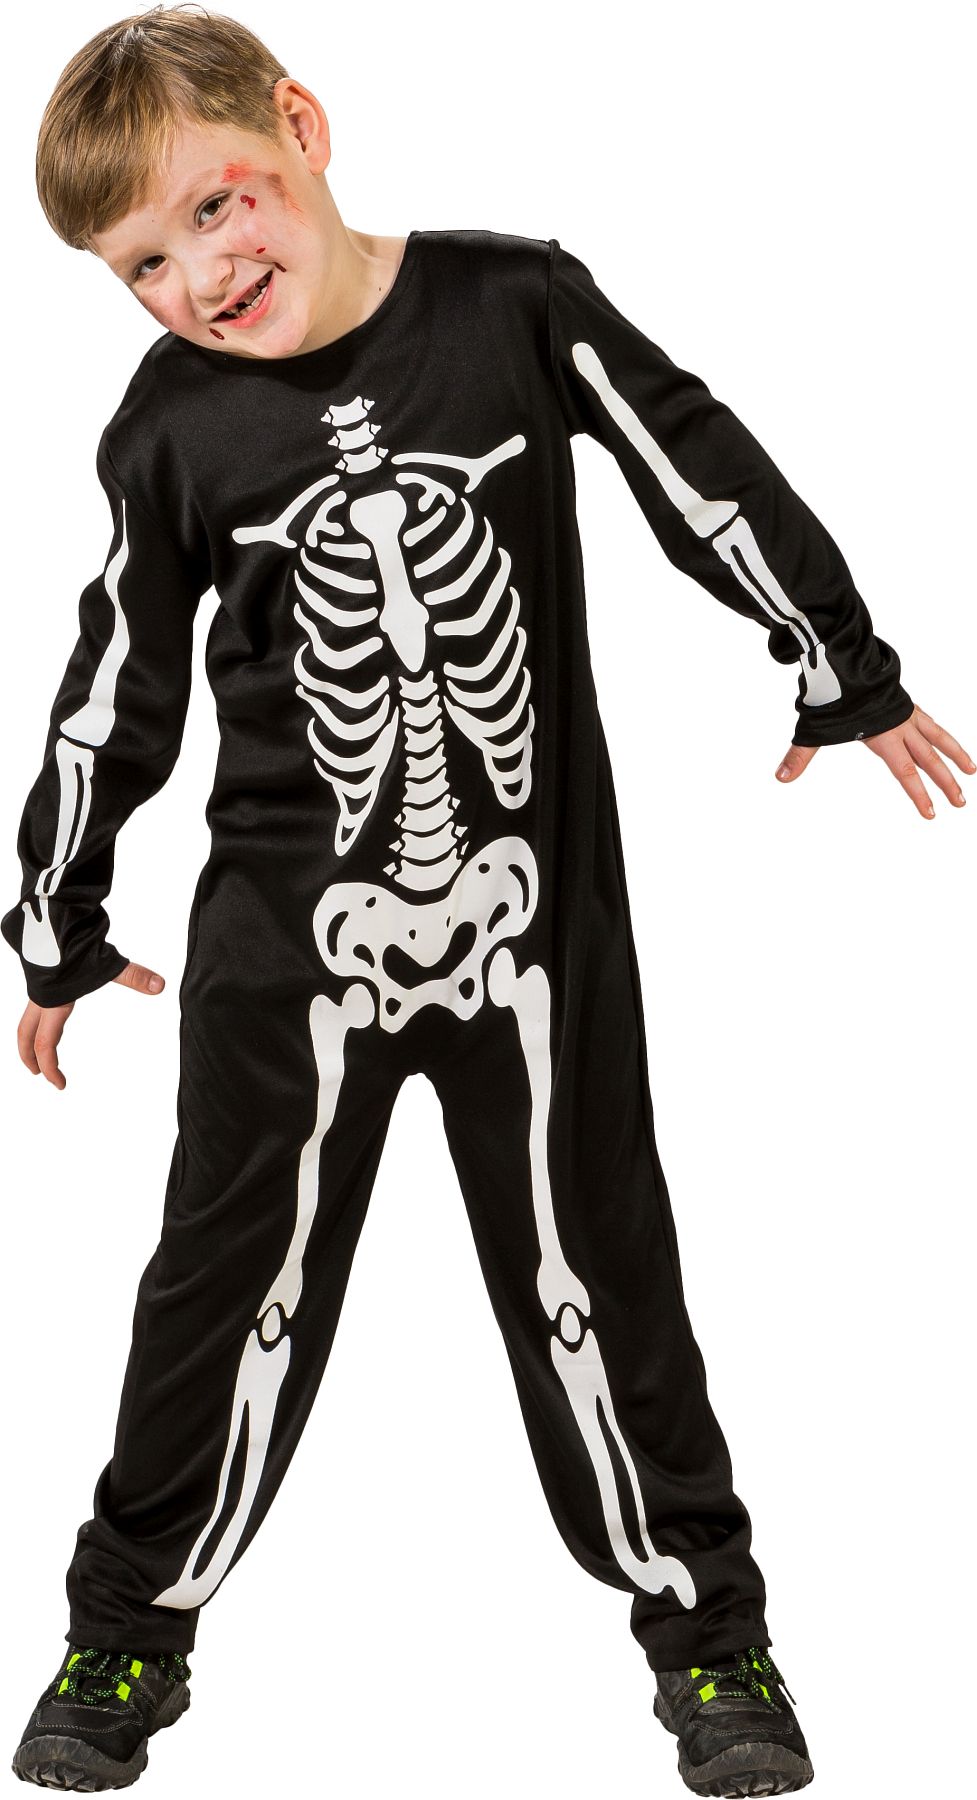 Skeleton suit